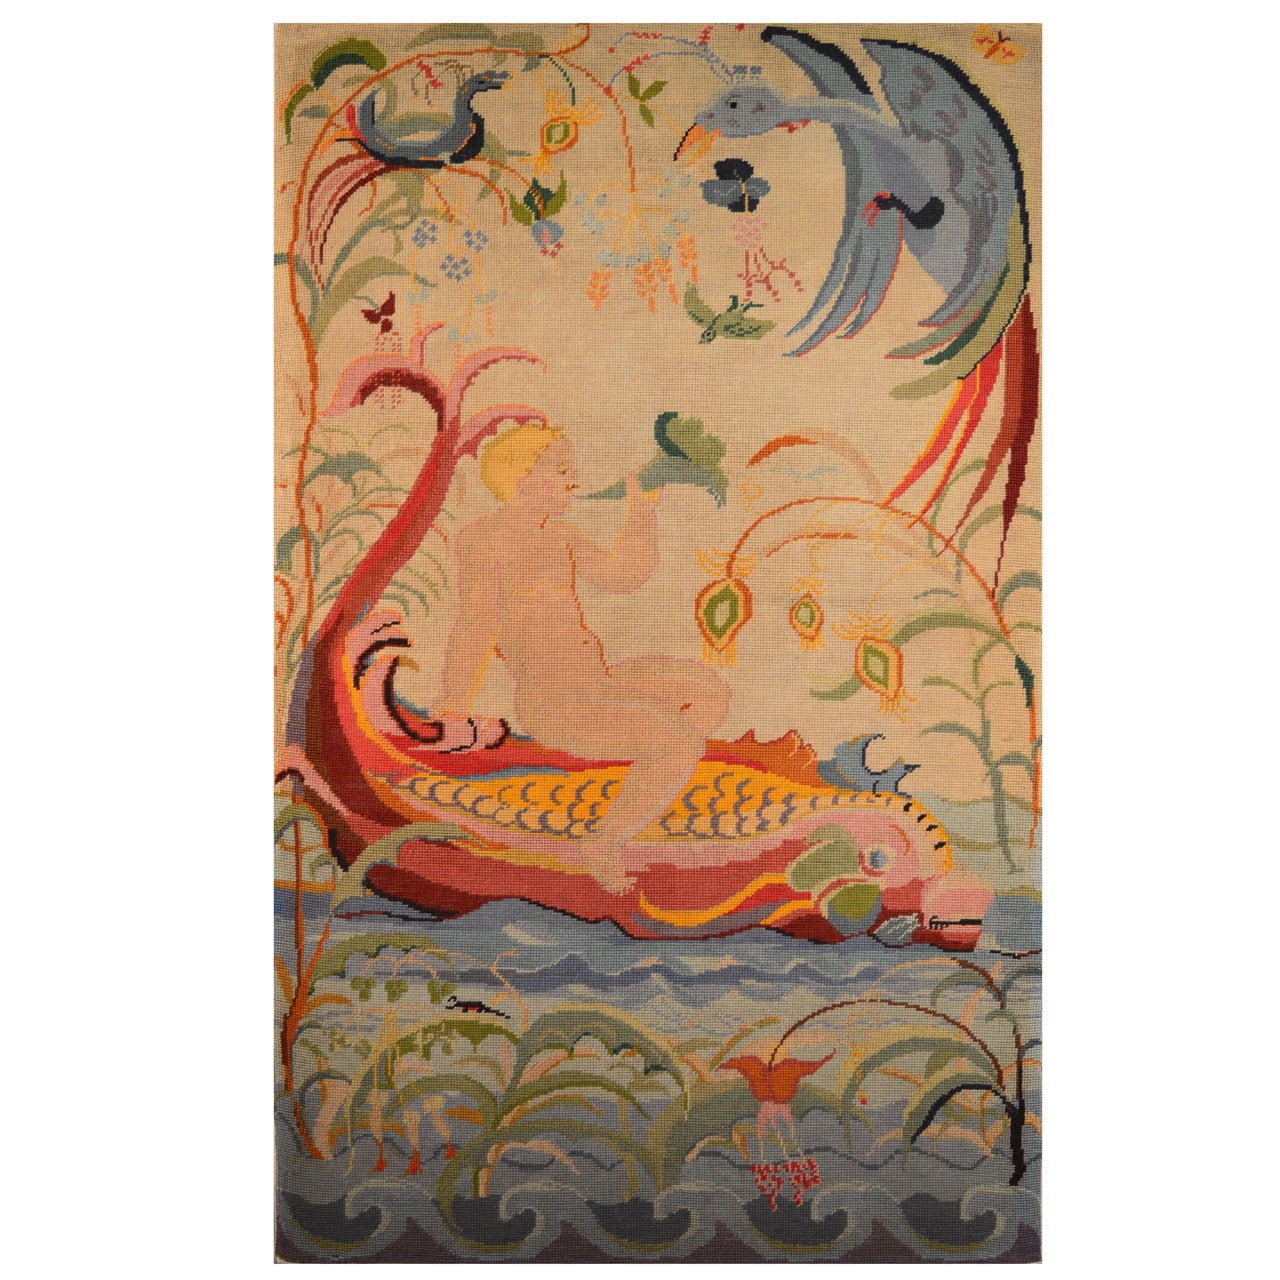 Belgian Art Nouveau Style Needlepoint Tapestry